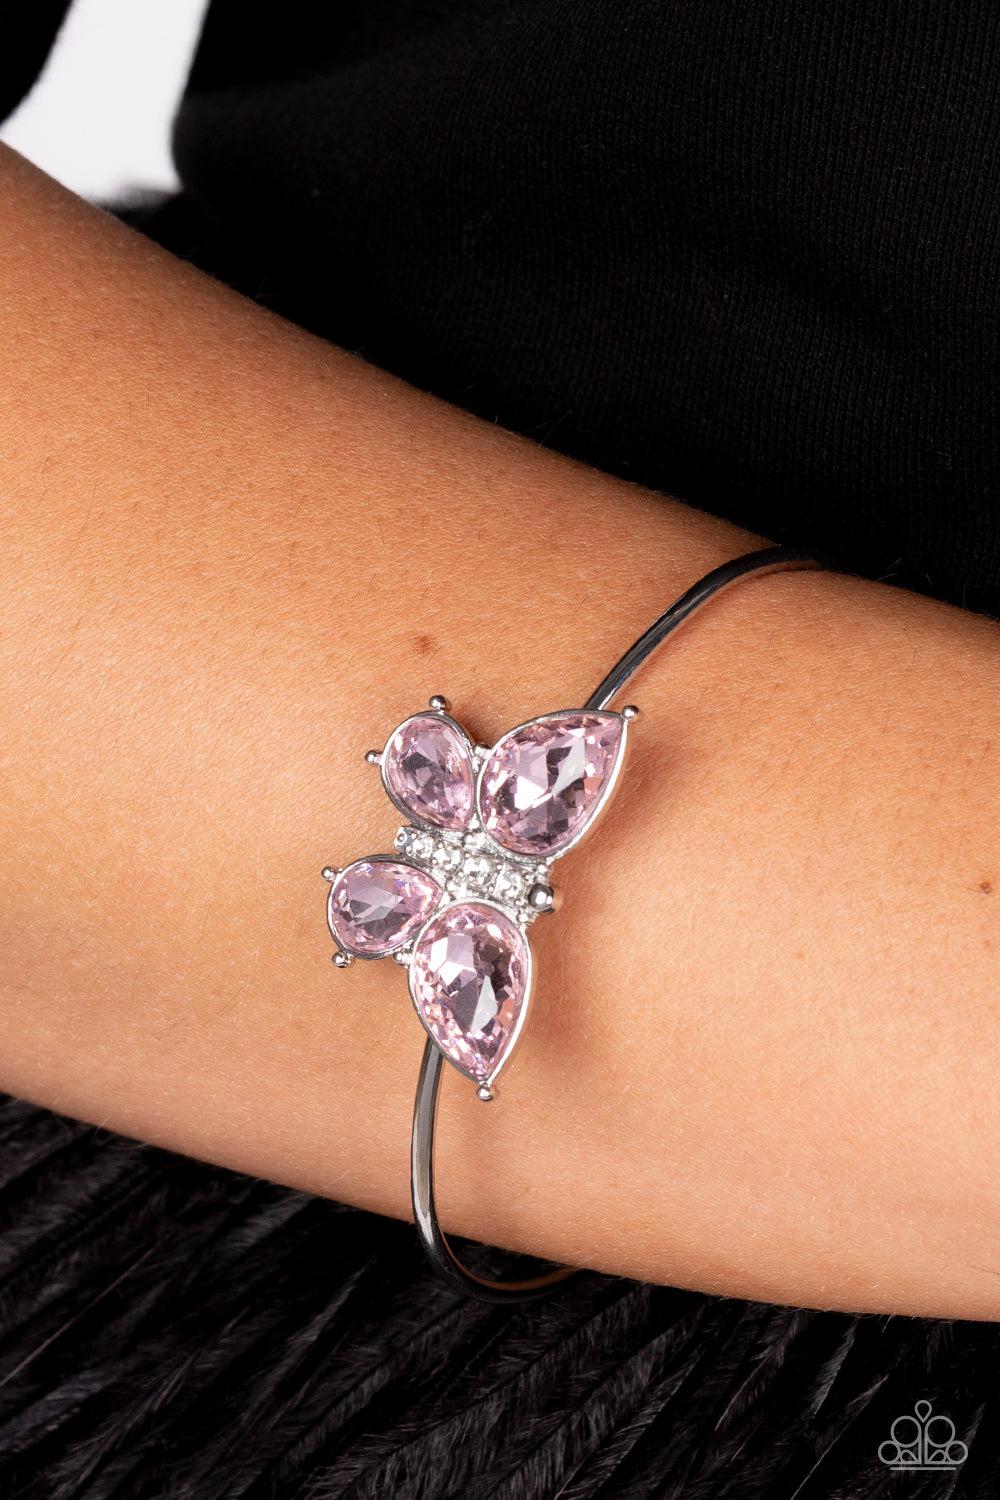 Butterfly Beatitude Pink Rhinestone Butterfly Cuff Bracelet - Paparazzi Accessories- lightbox - CarasShop.com - $5 Jewelry by Cara Jewels